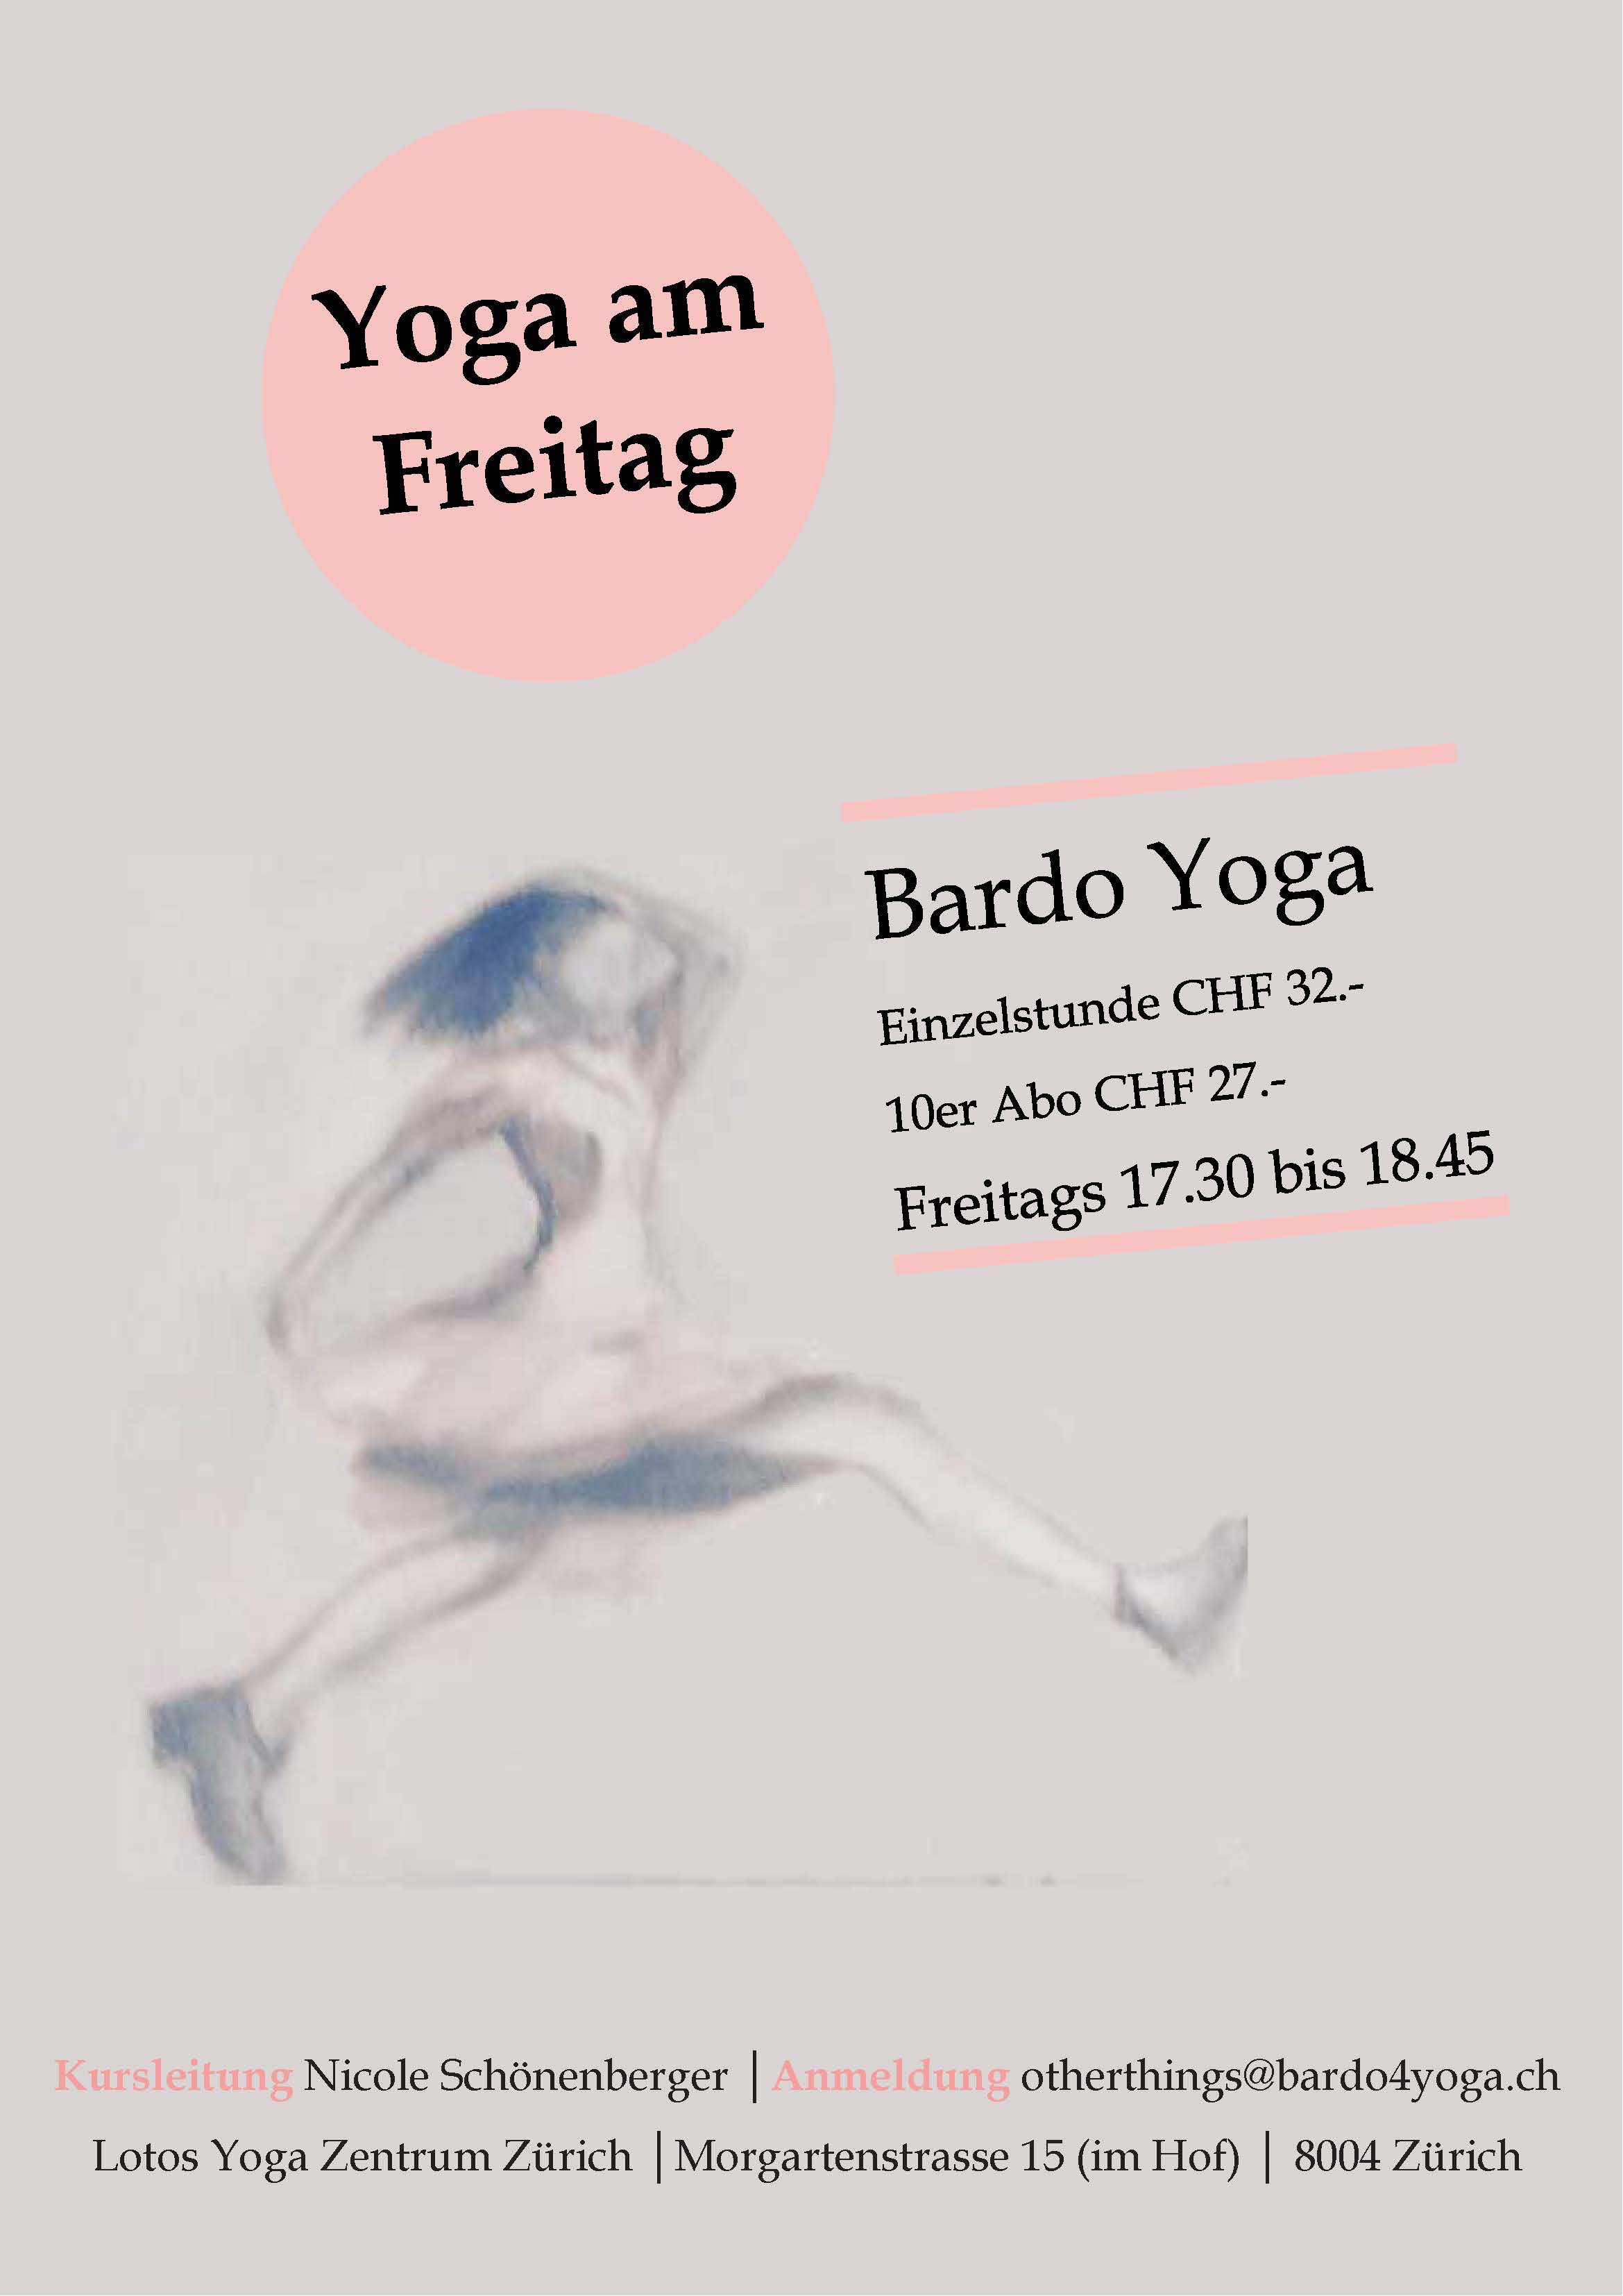 Bardo Yoga in Zürich